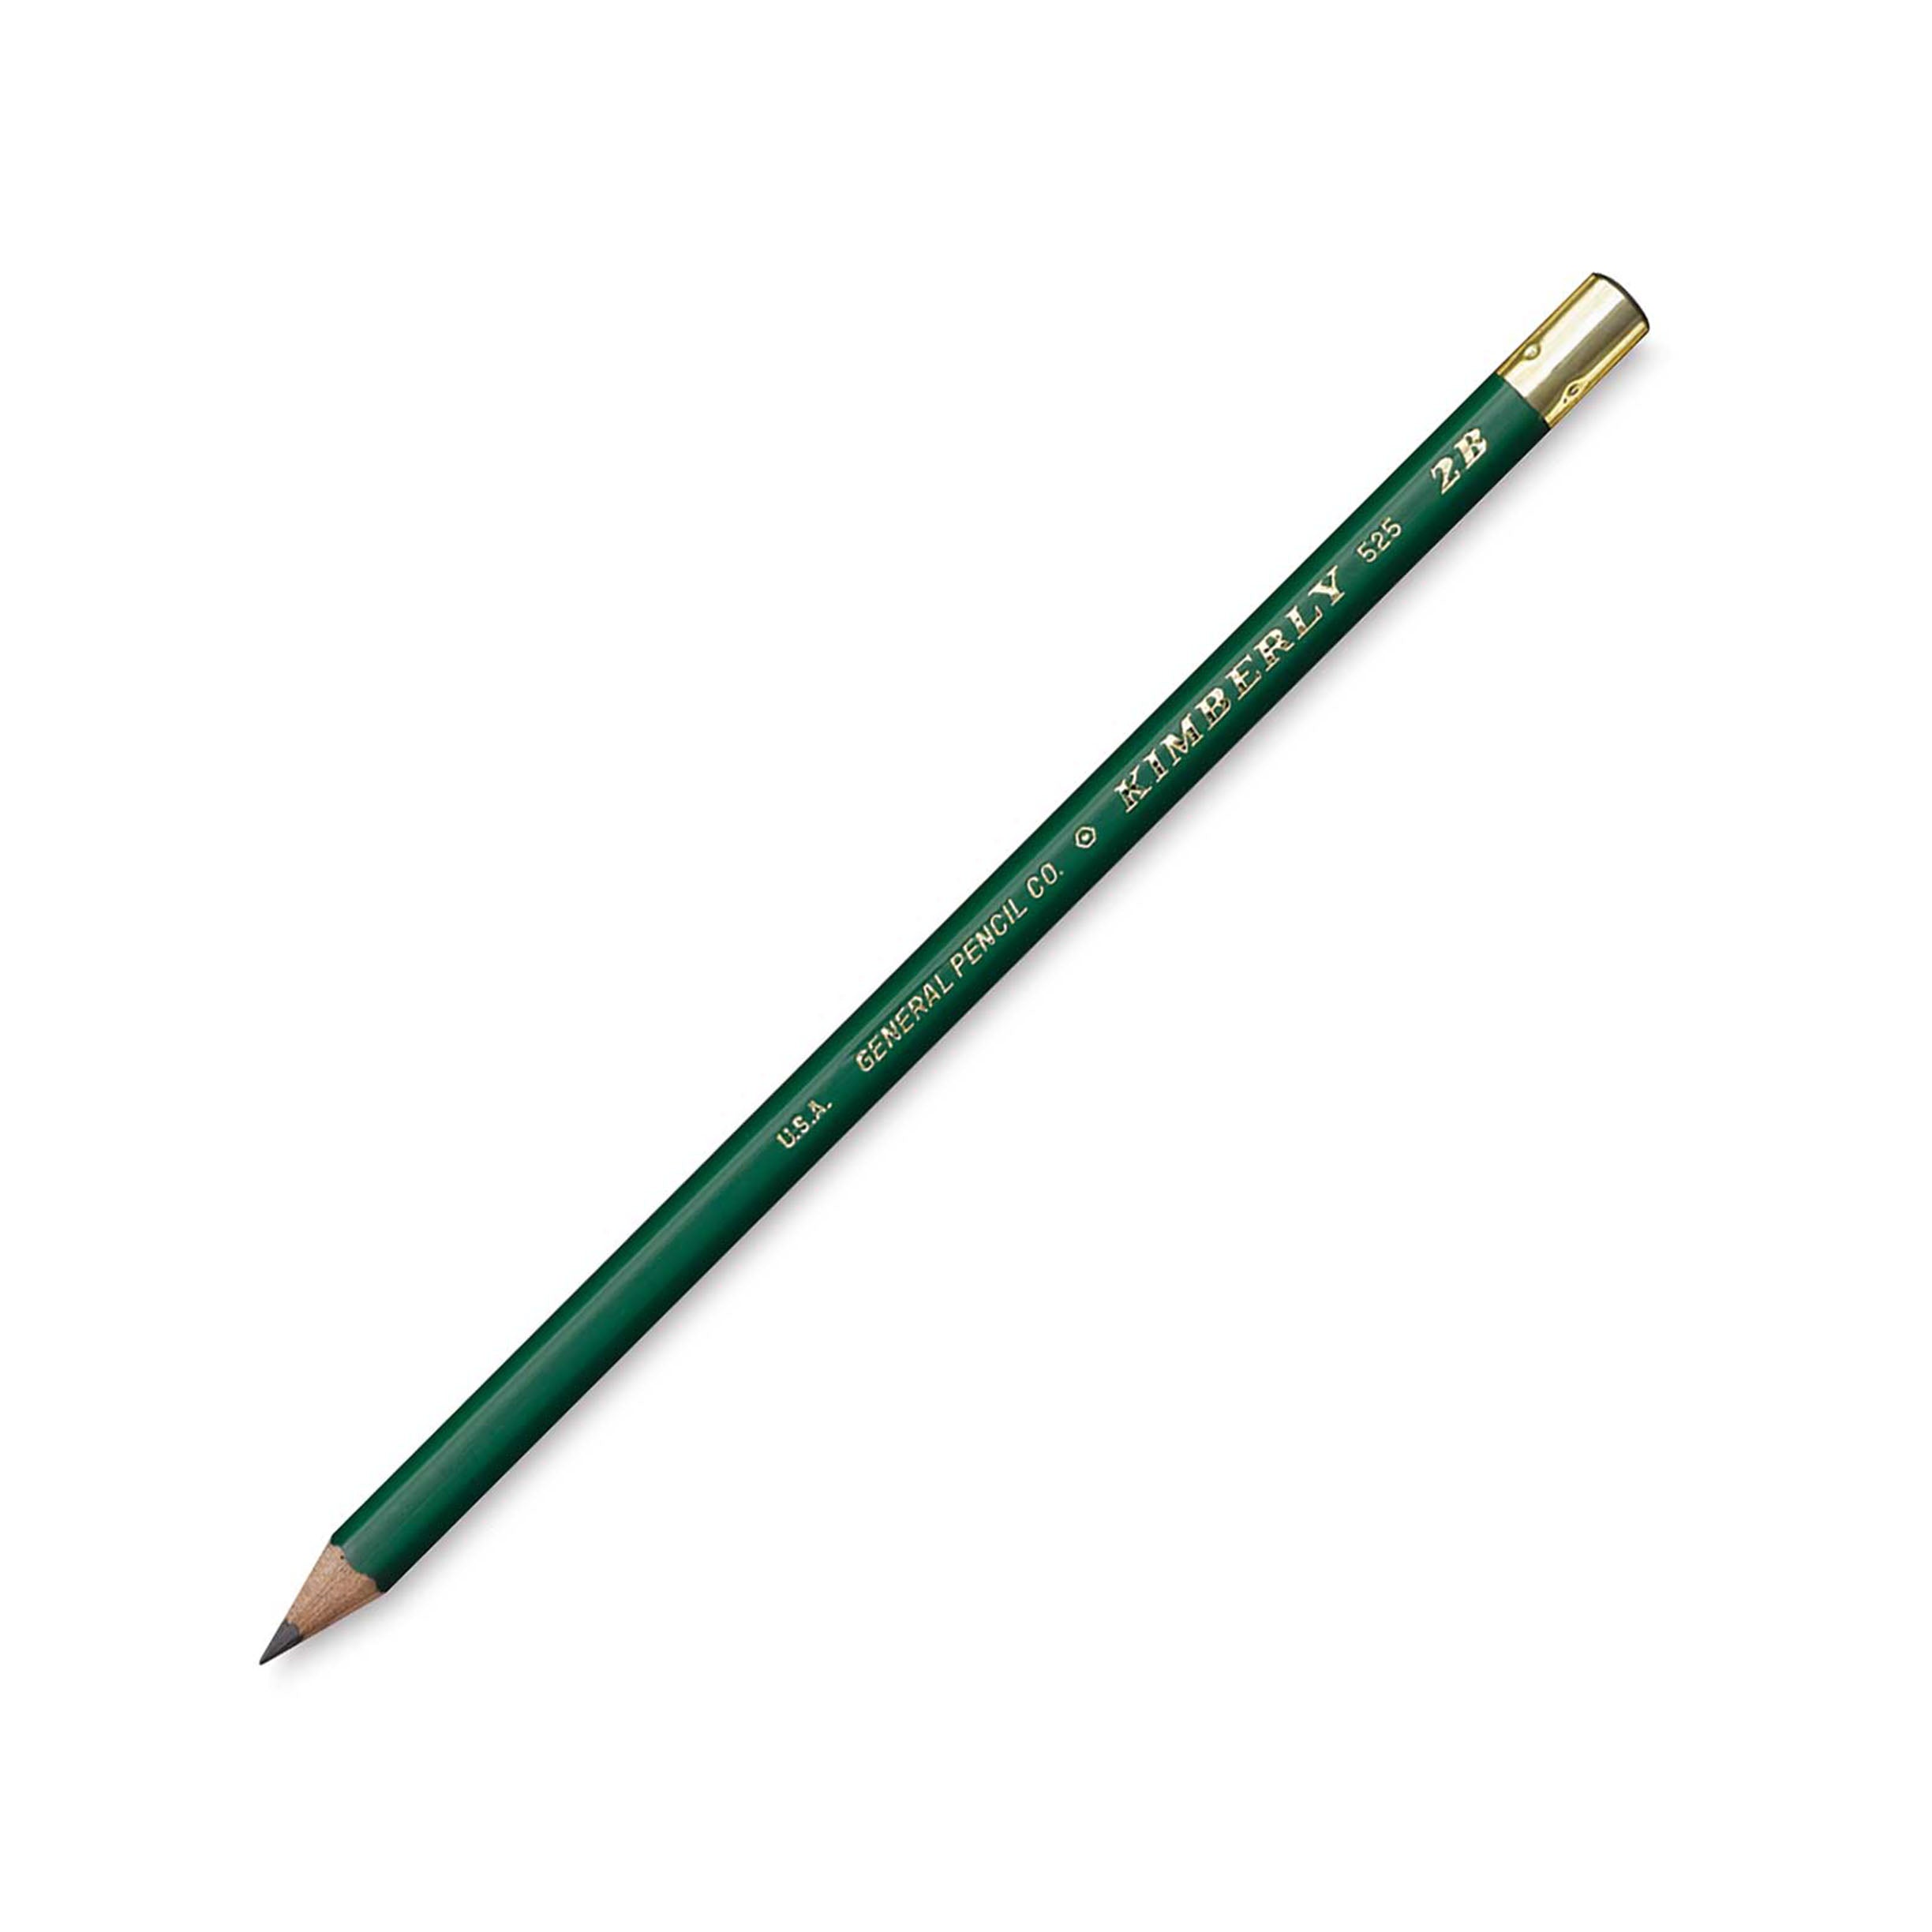 General's Kimberly Drawing Pencil, 2B